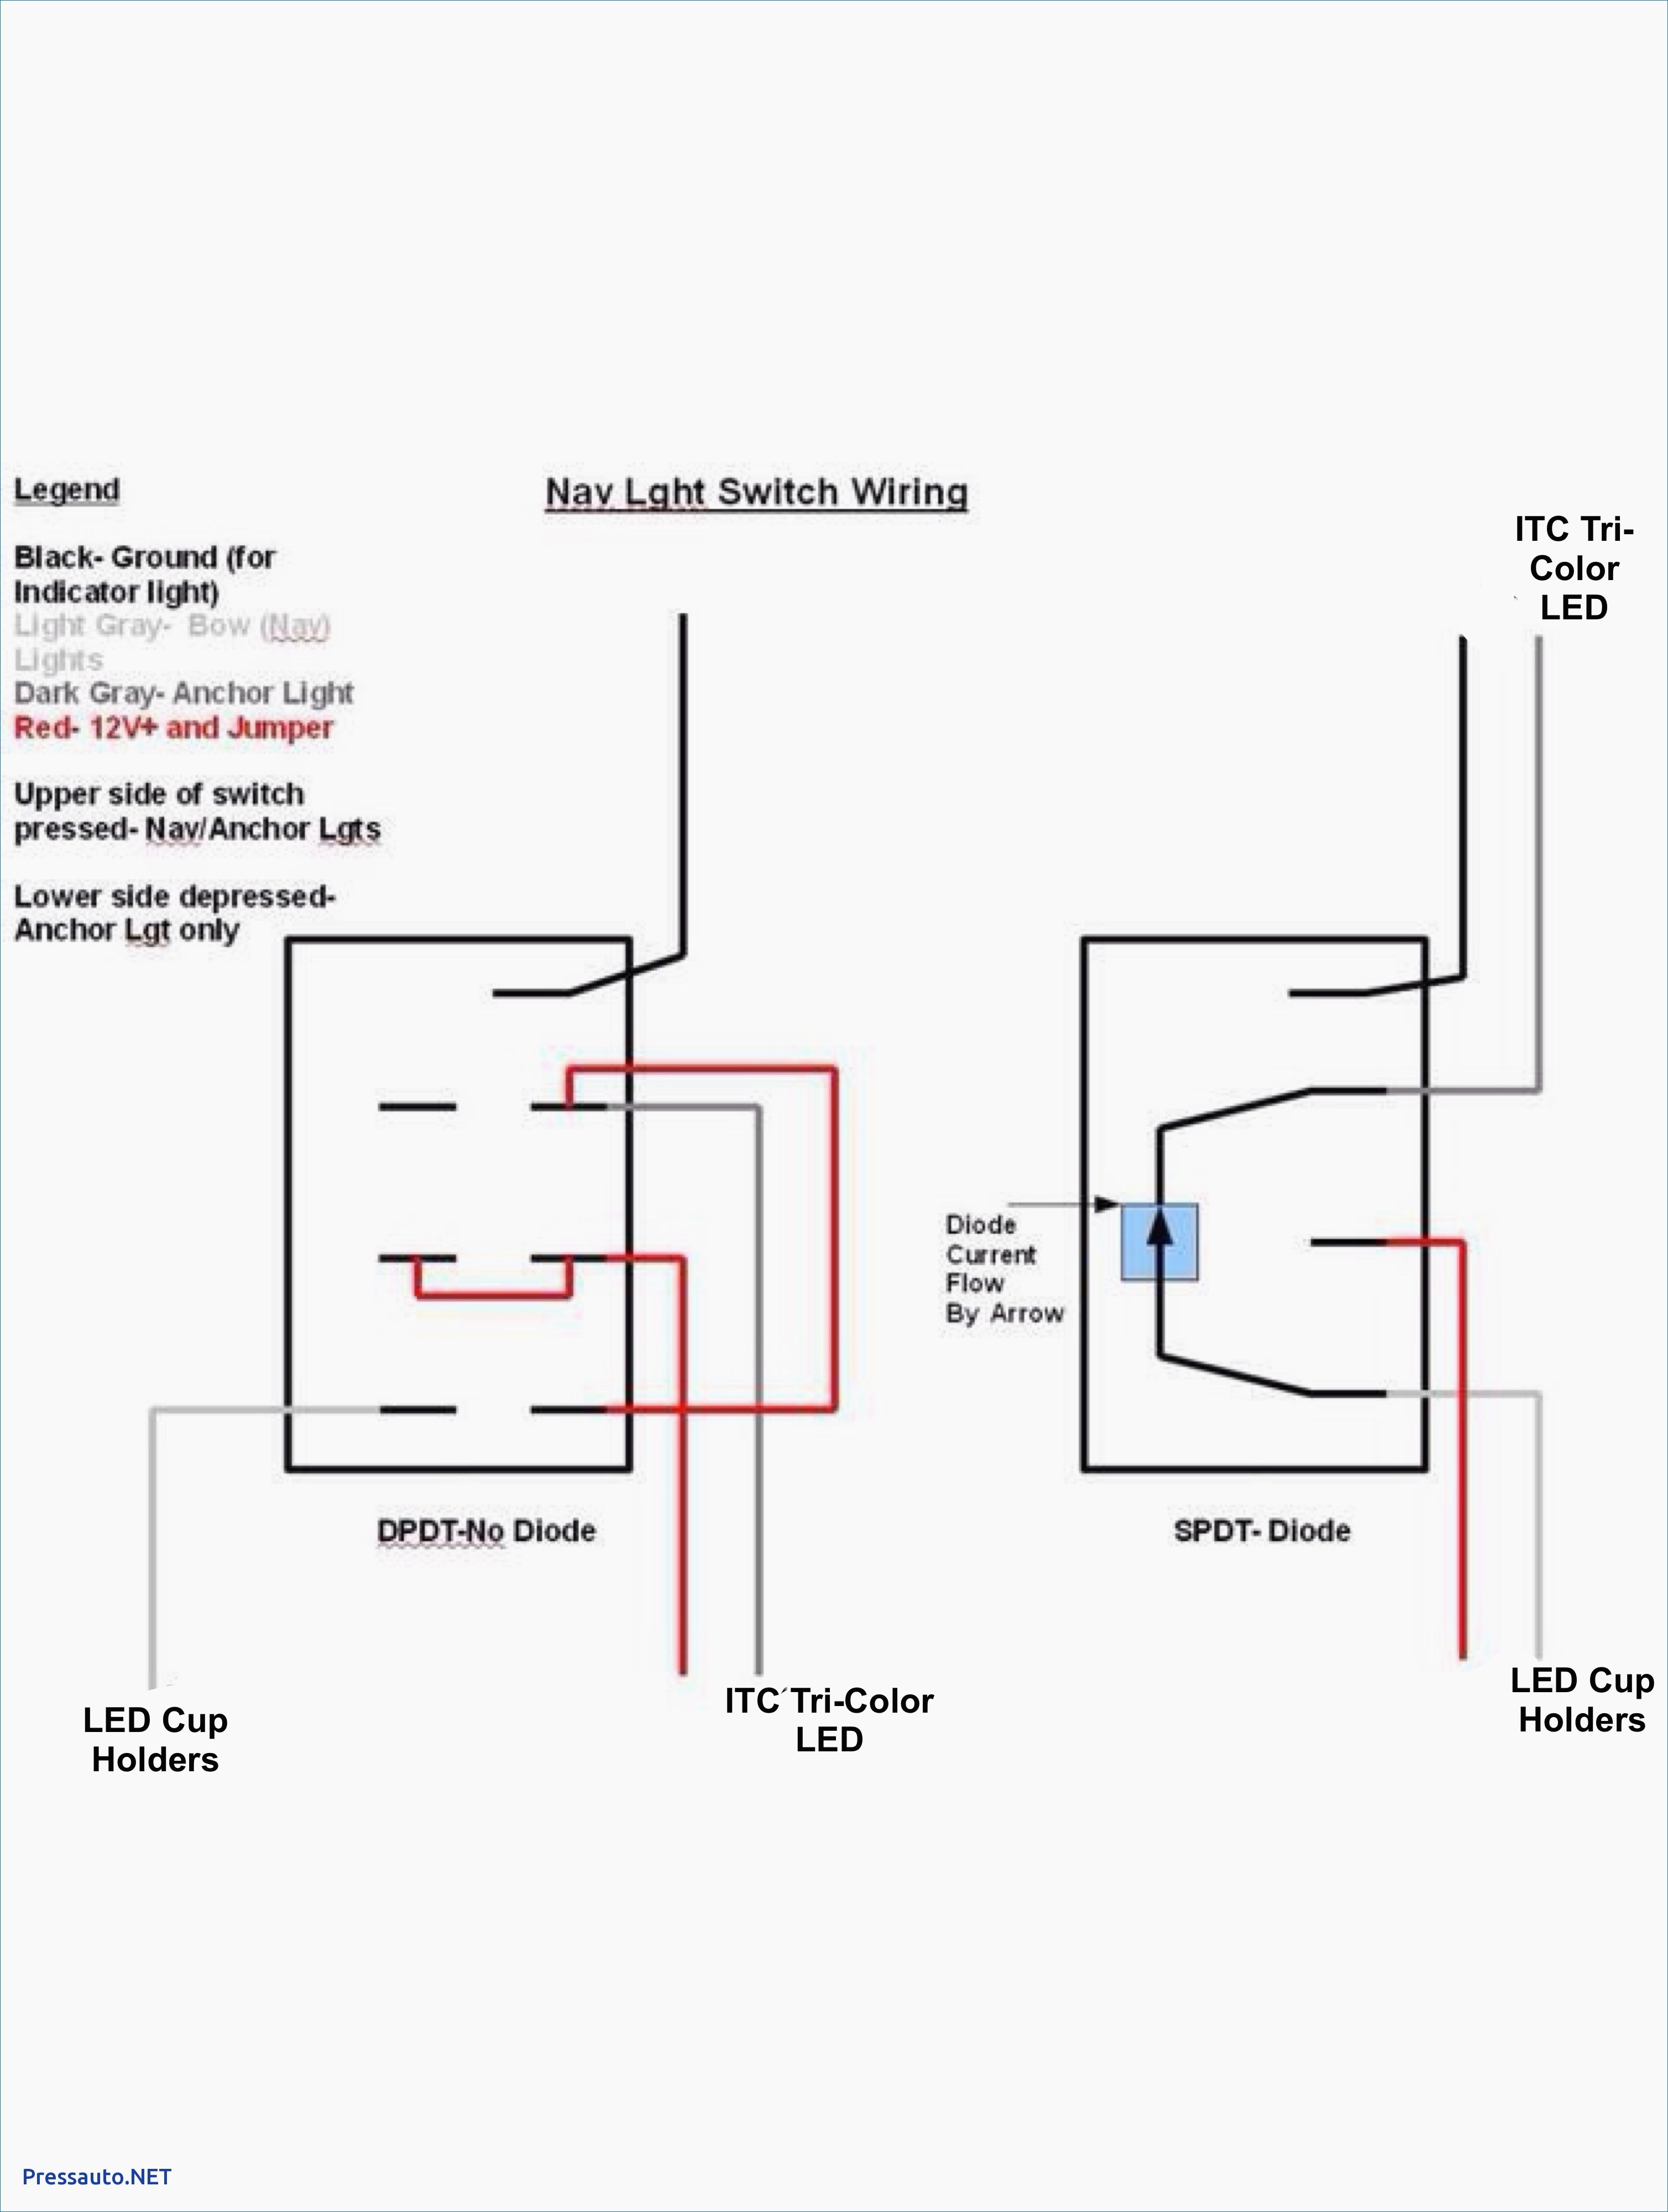 Lighted Rocker Switch Wiring Diagram 120v New Lighted toggle Switch Wiring Diagram Wiring Diagrams